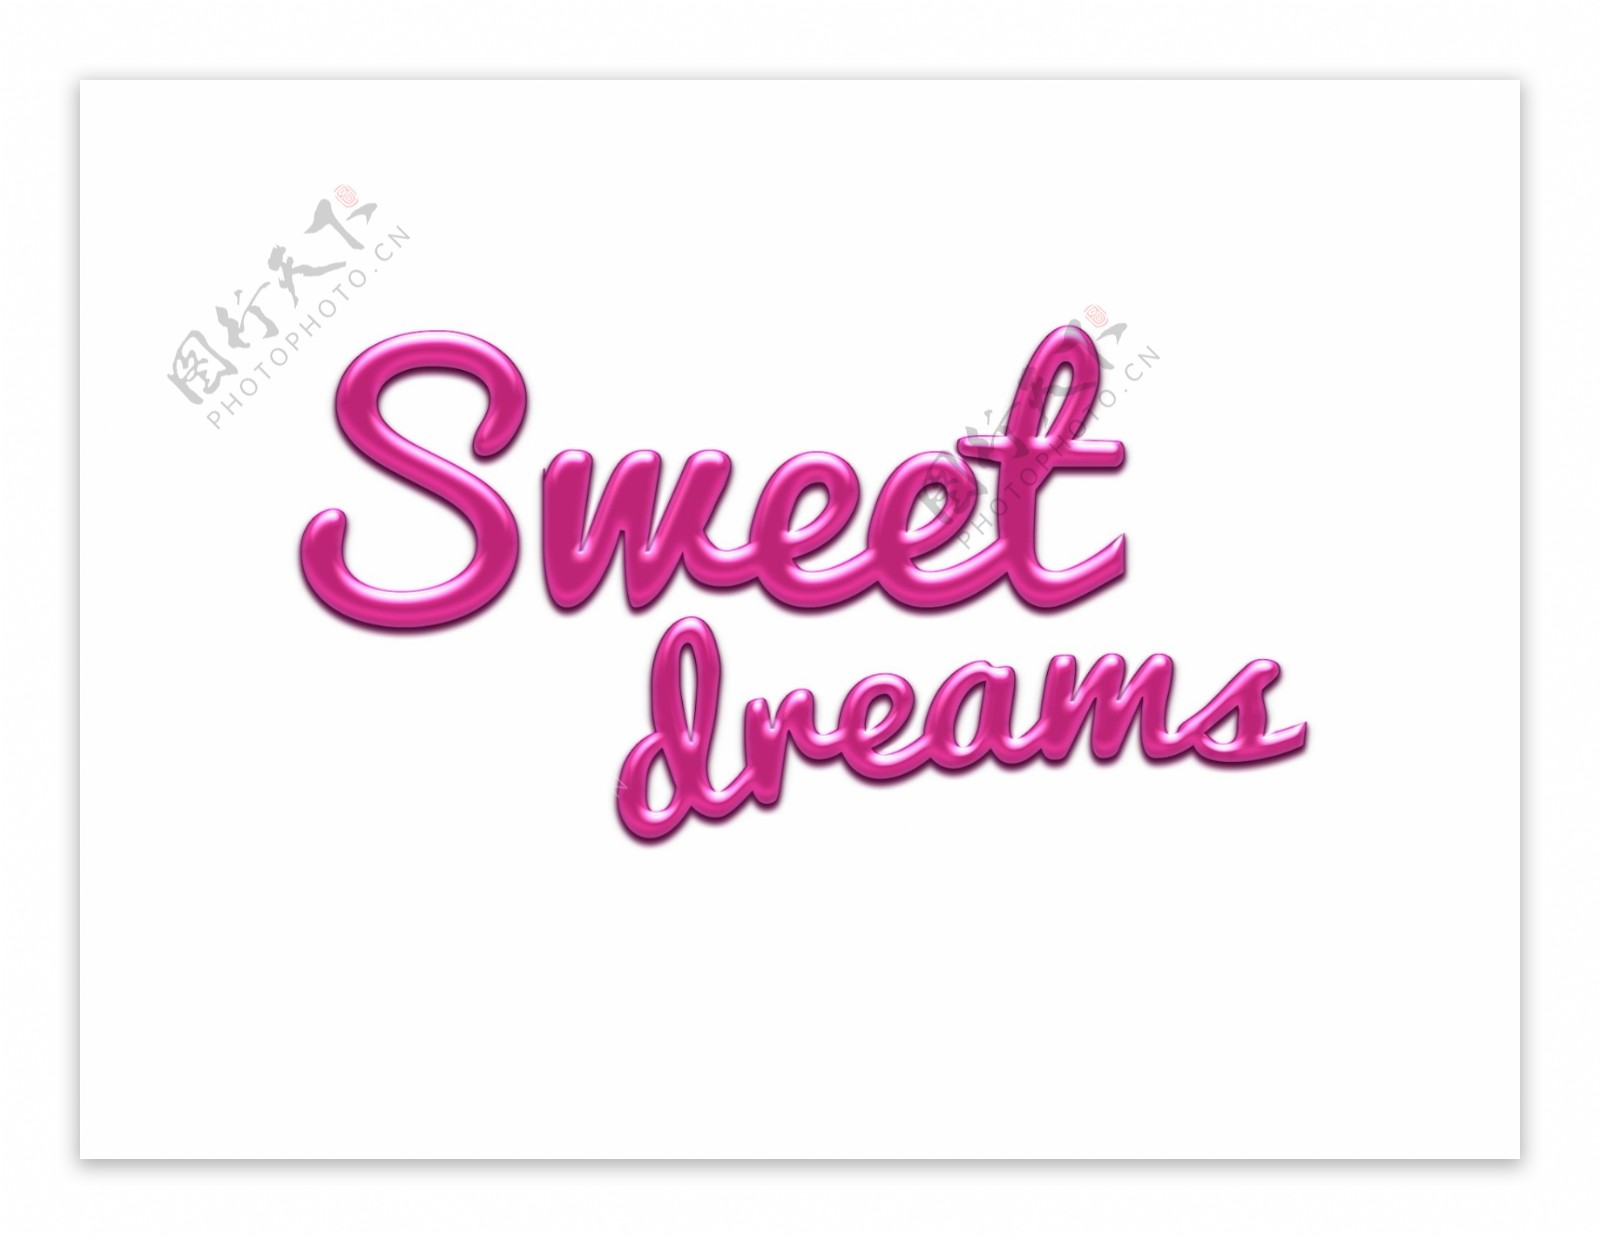 Sweetdreams糖果字